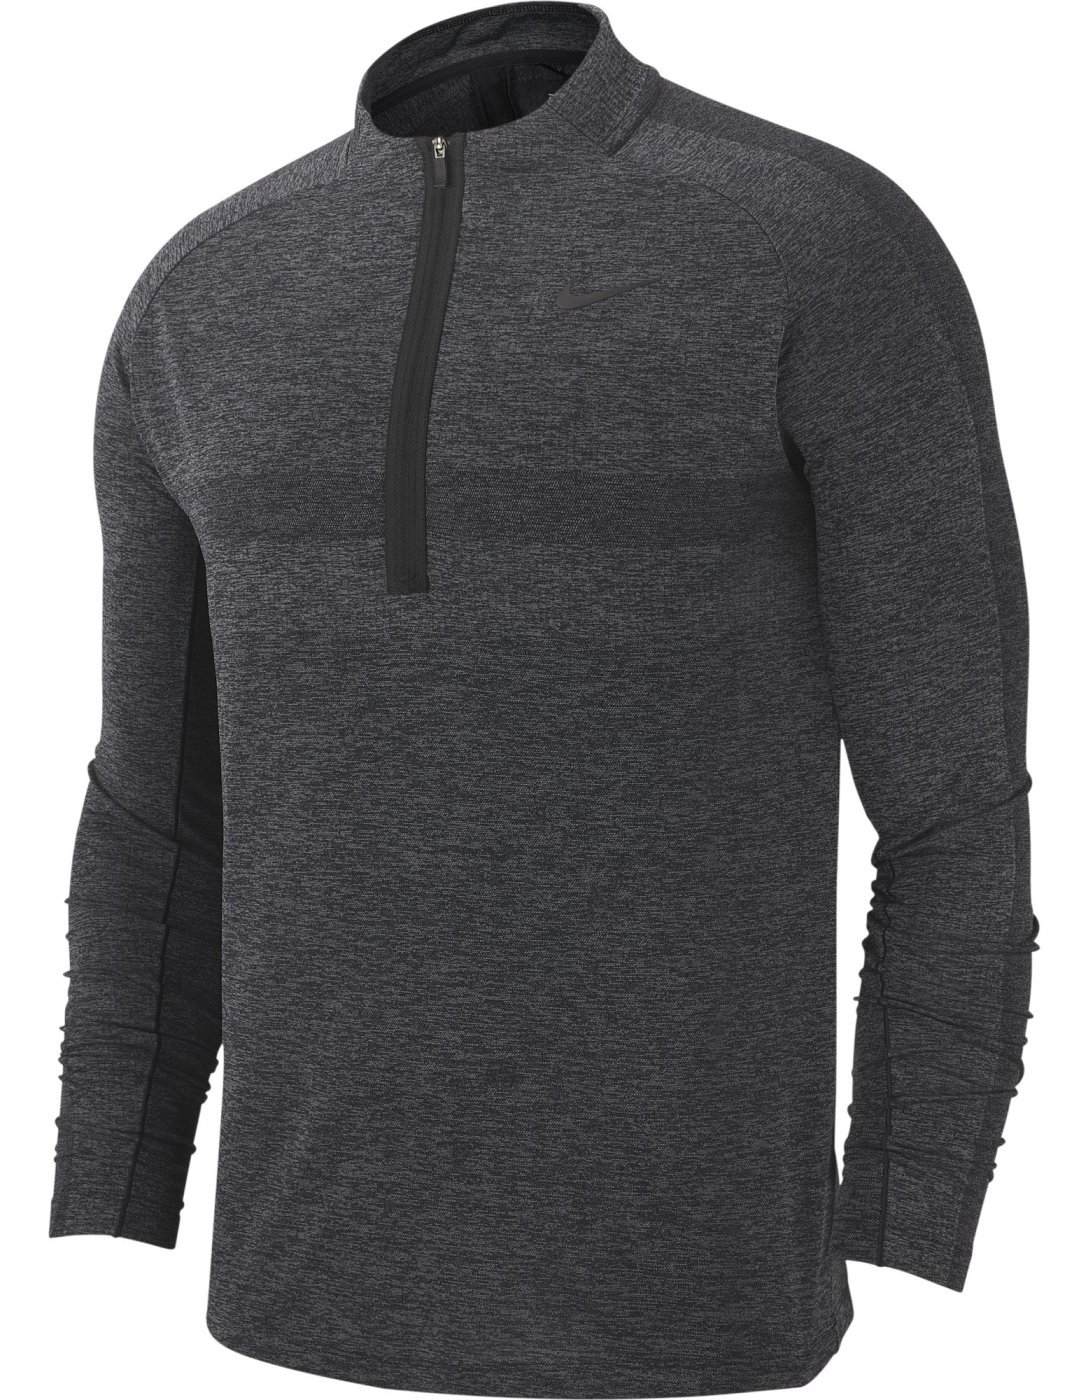 Hoodie/Trui Nike Dry Knit Statement 1/2 Zip Mens Sweater Black/Dark Grey S